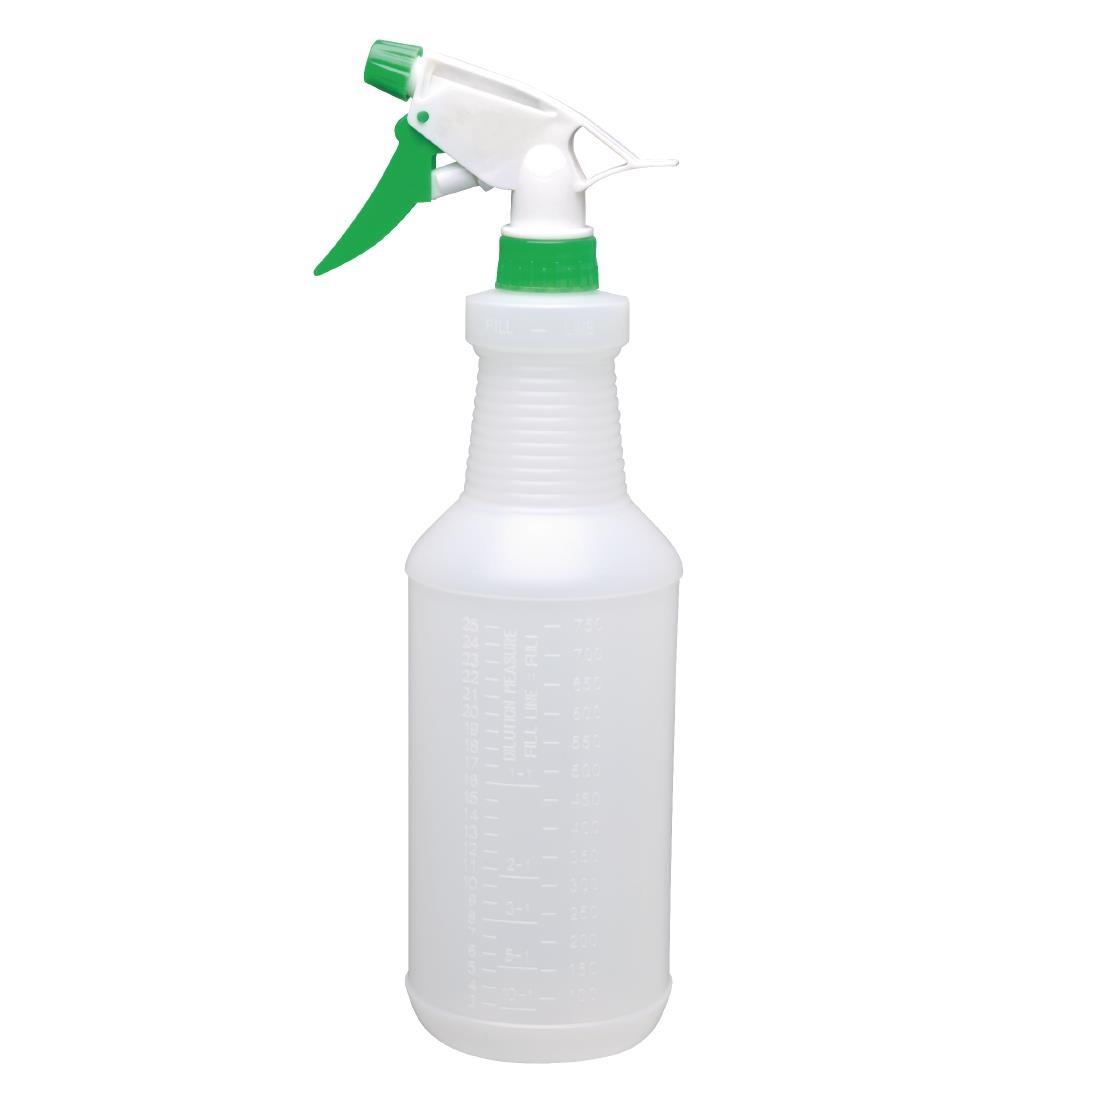 Jantex Colour-Coded Trigger Spray Bottle Green 750ml - CD818  - 1